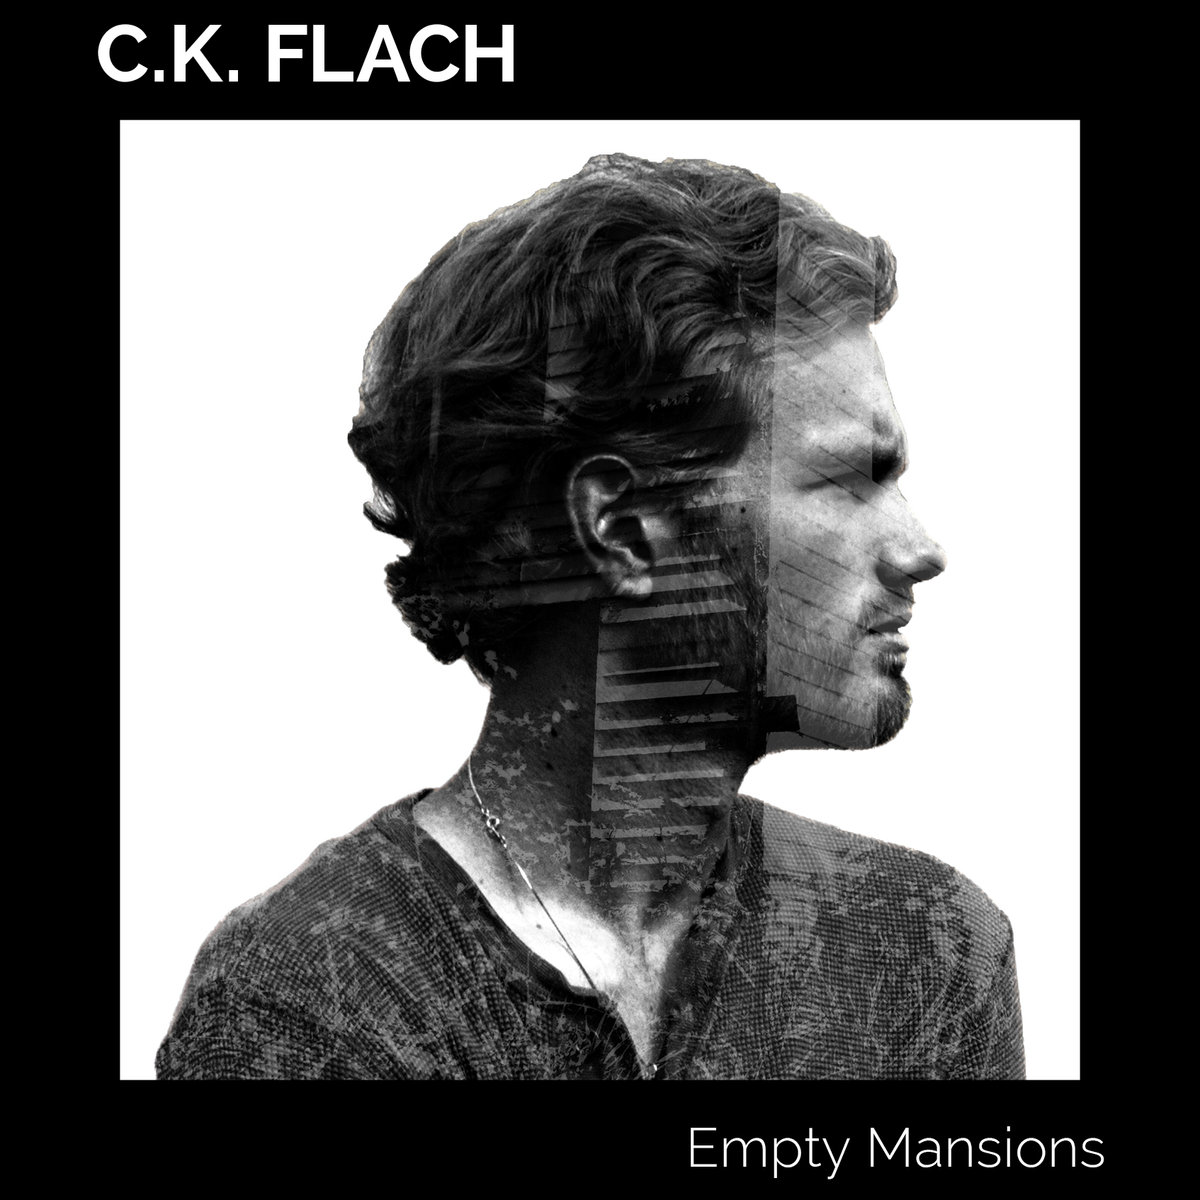 C.K. Flach - "Empty Mansions"